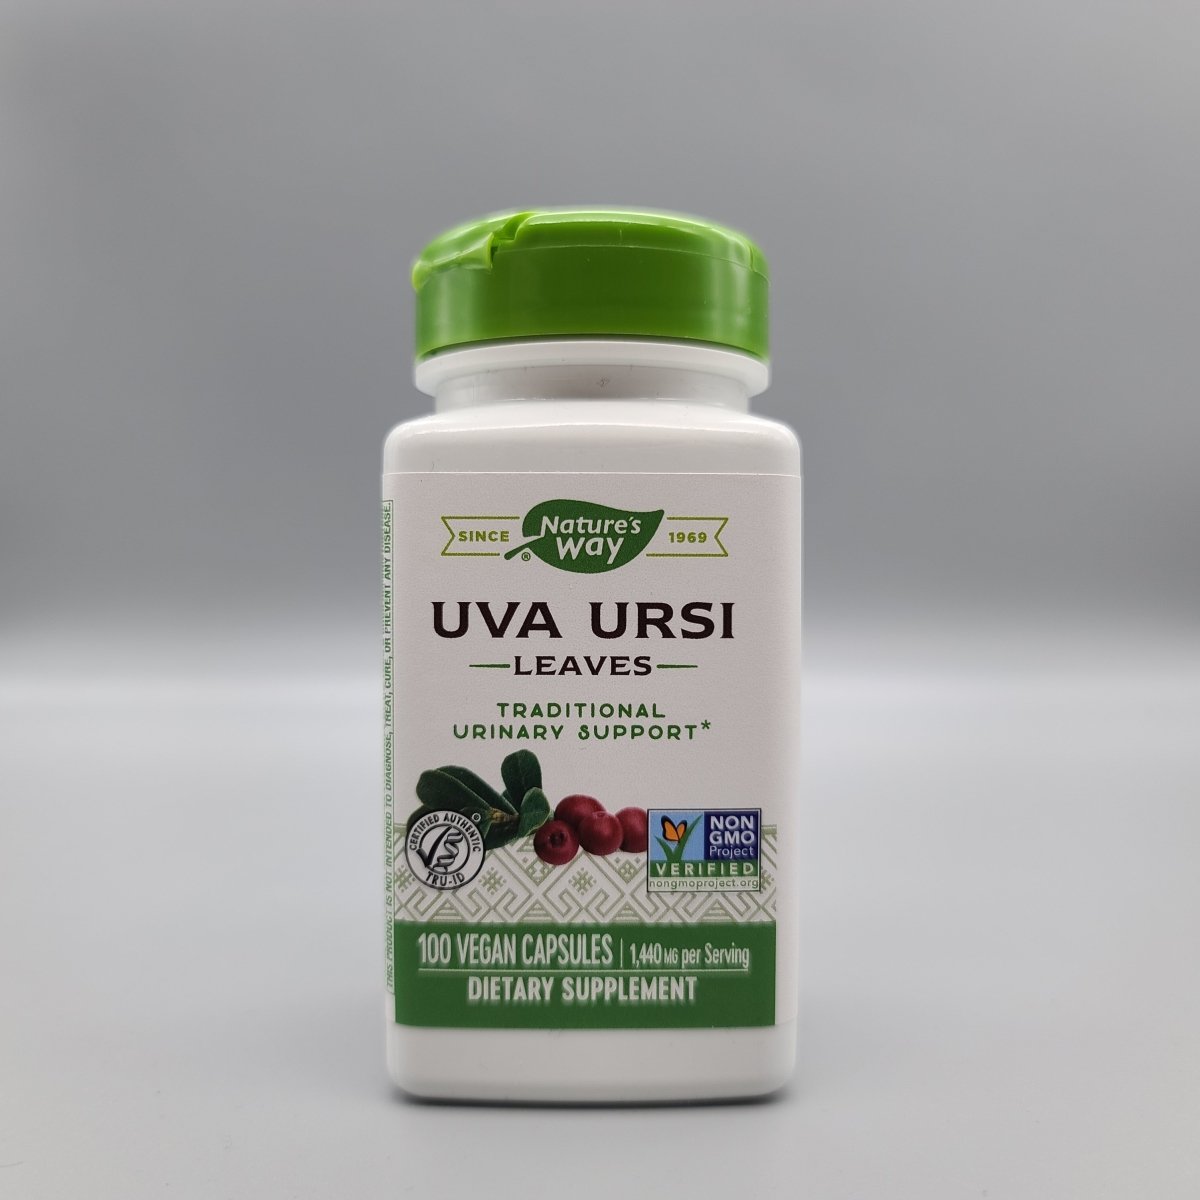 Uva Ursi - Leaves - 100 Vegan Capsules - 1,440mg